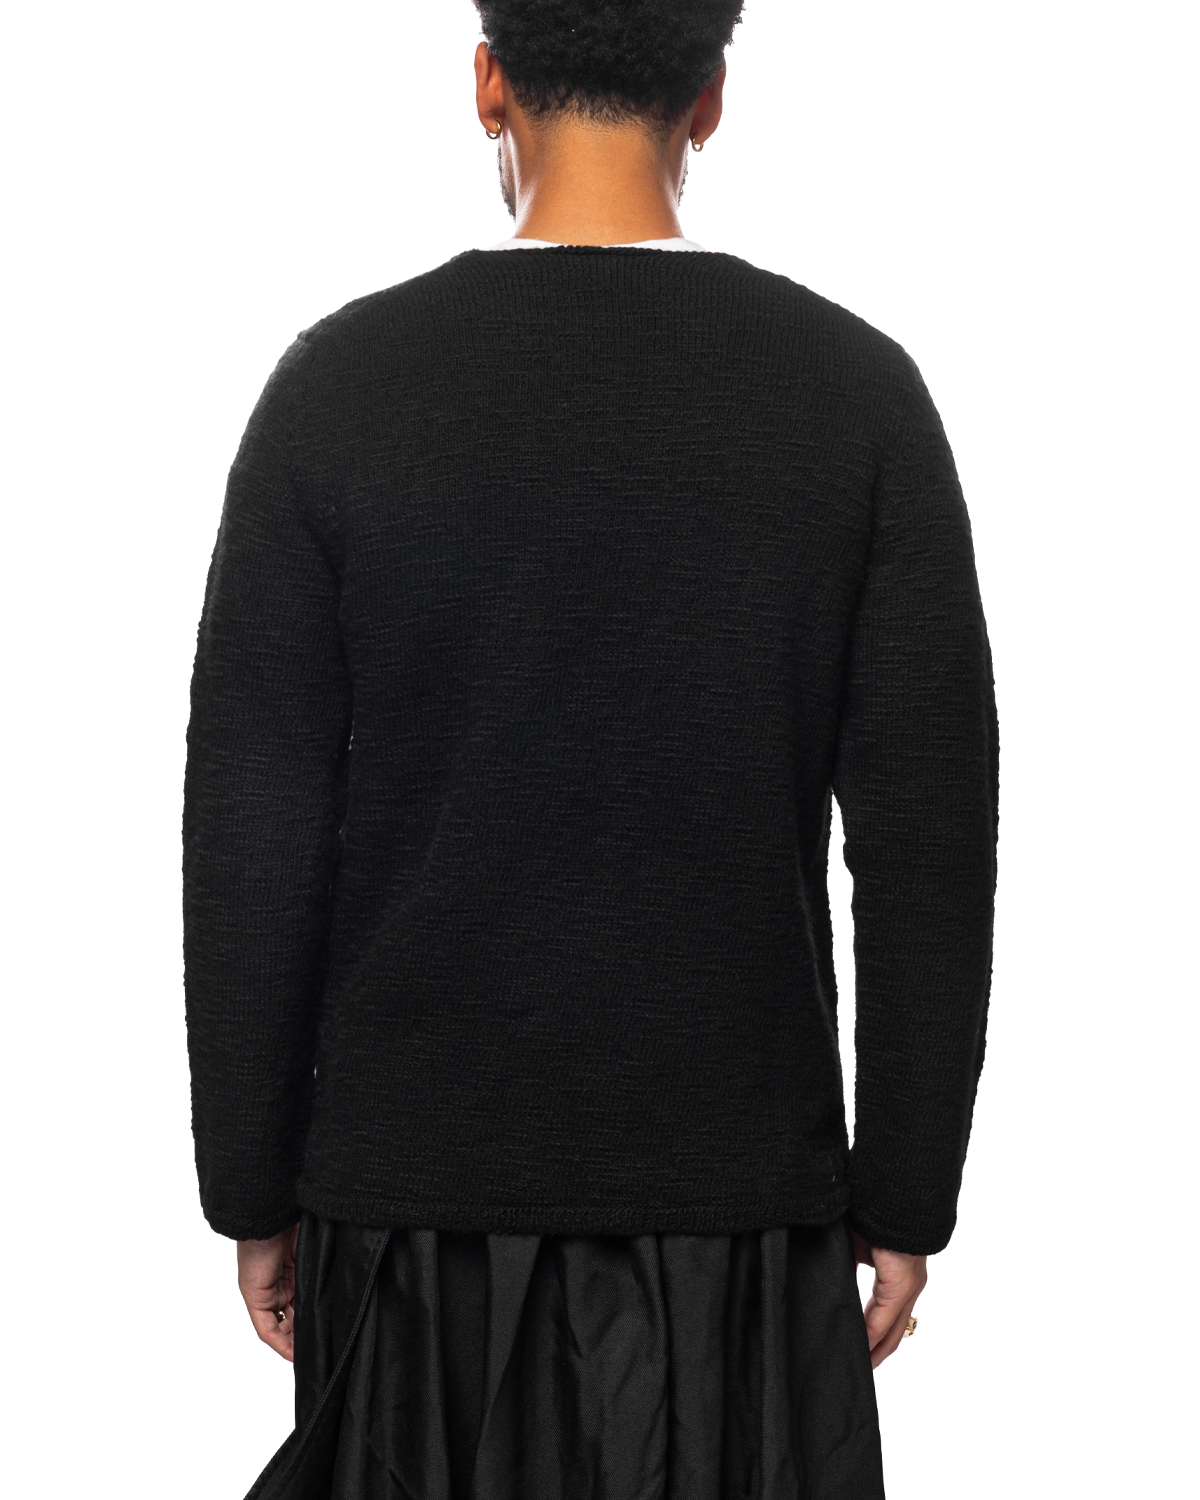 Distressed Crewneck Sweater Black